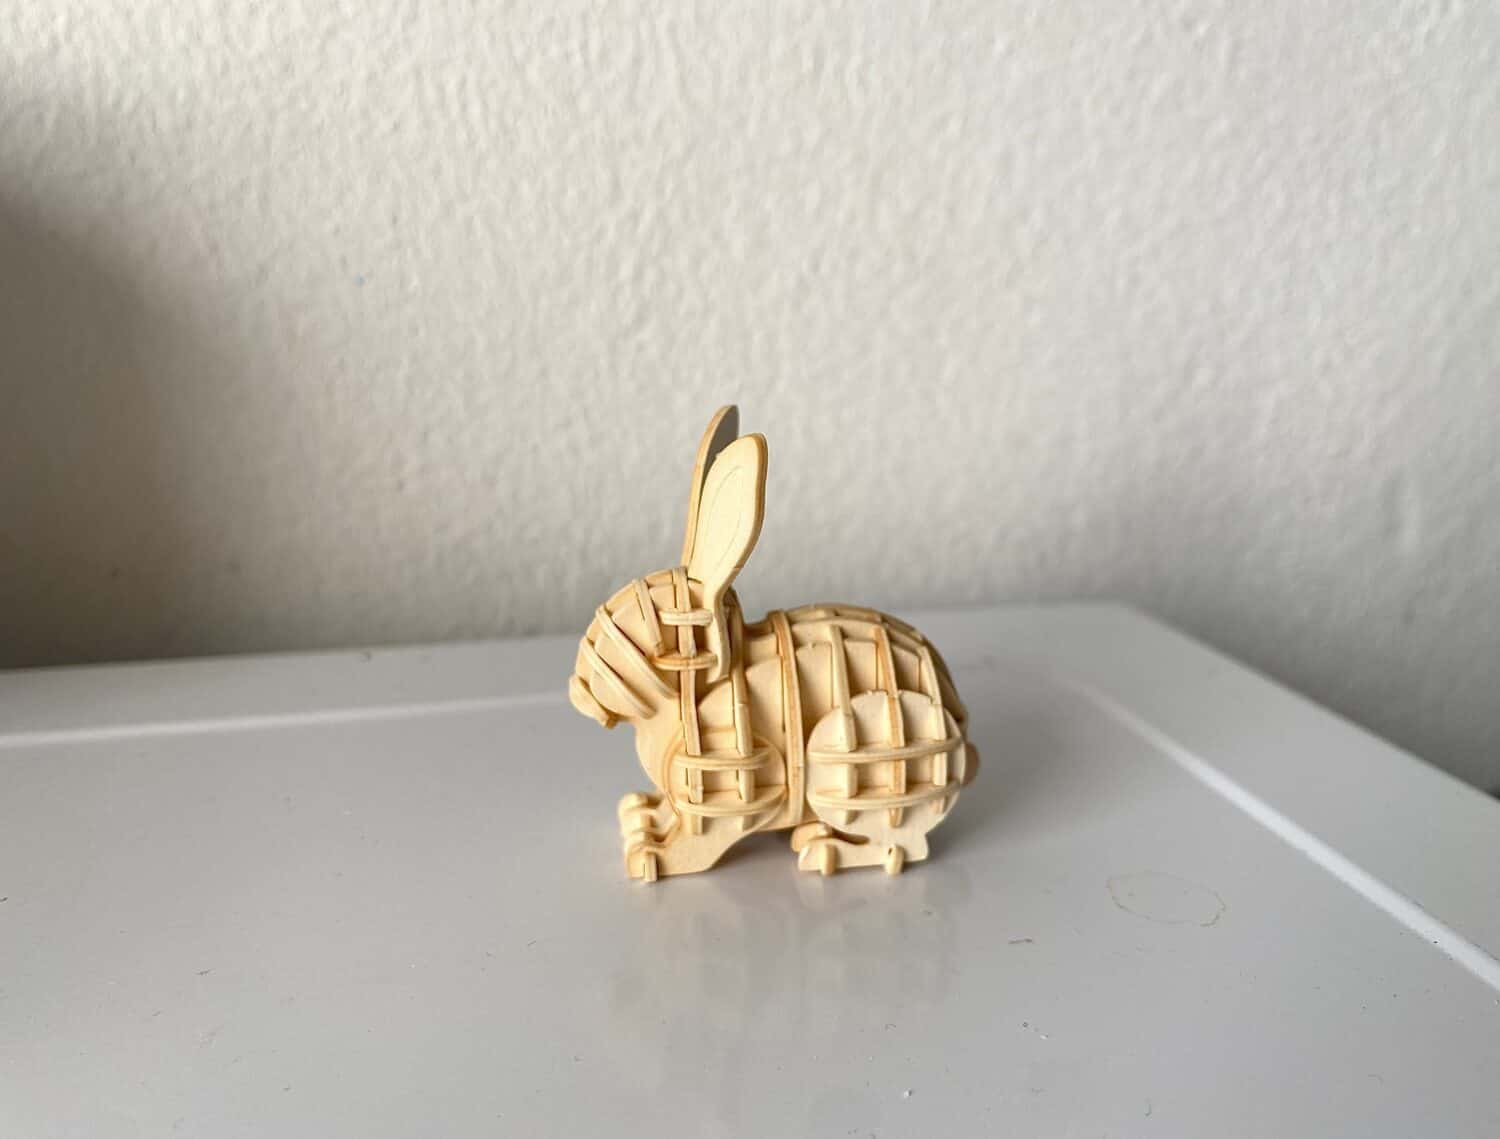 3D rabbit puzzle,  3D wooden model, little bunny, Jigsaw